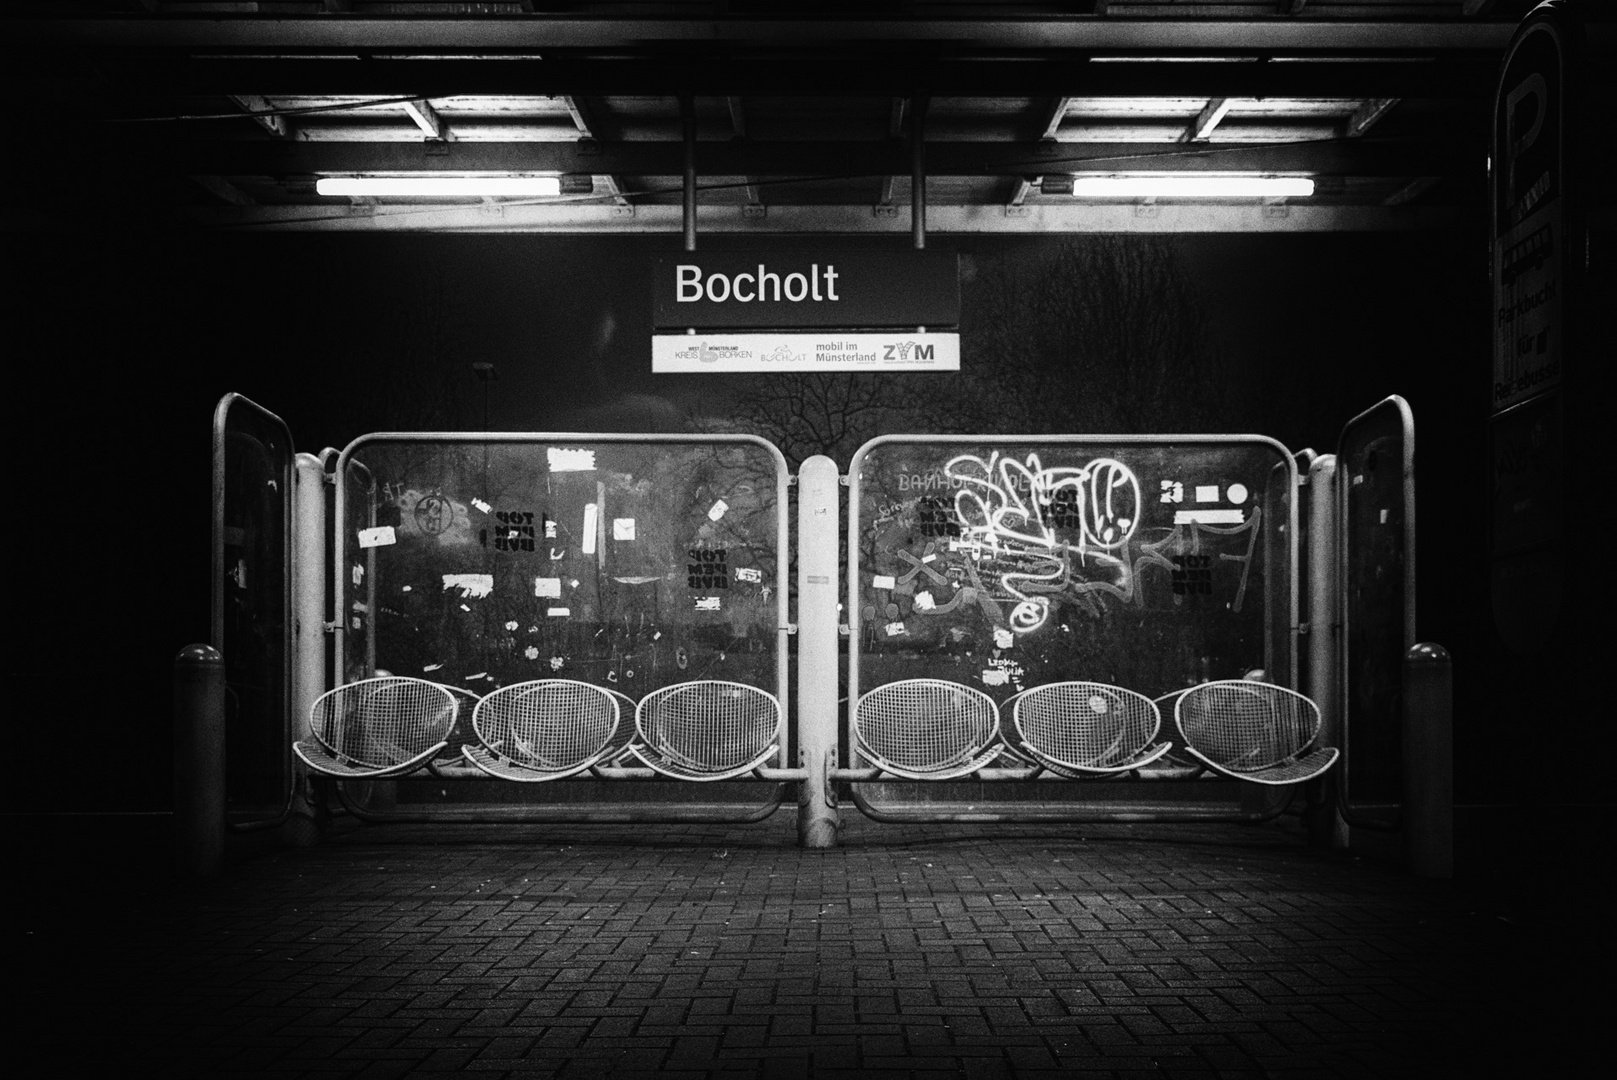 Bocholt Bahnhof